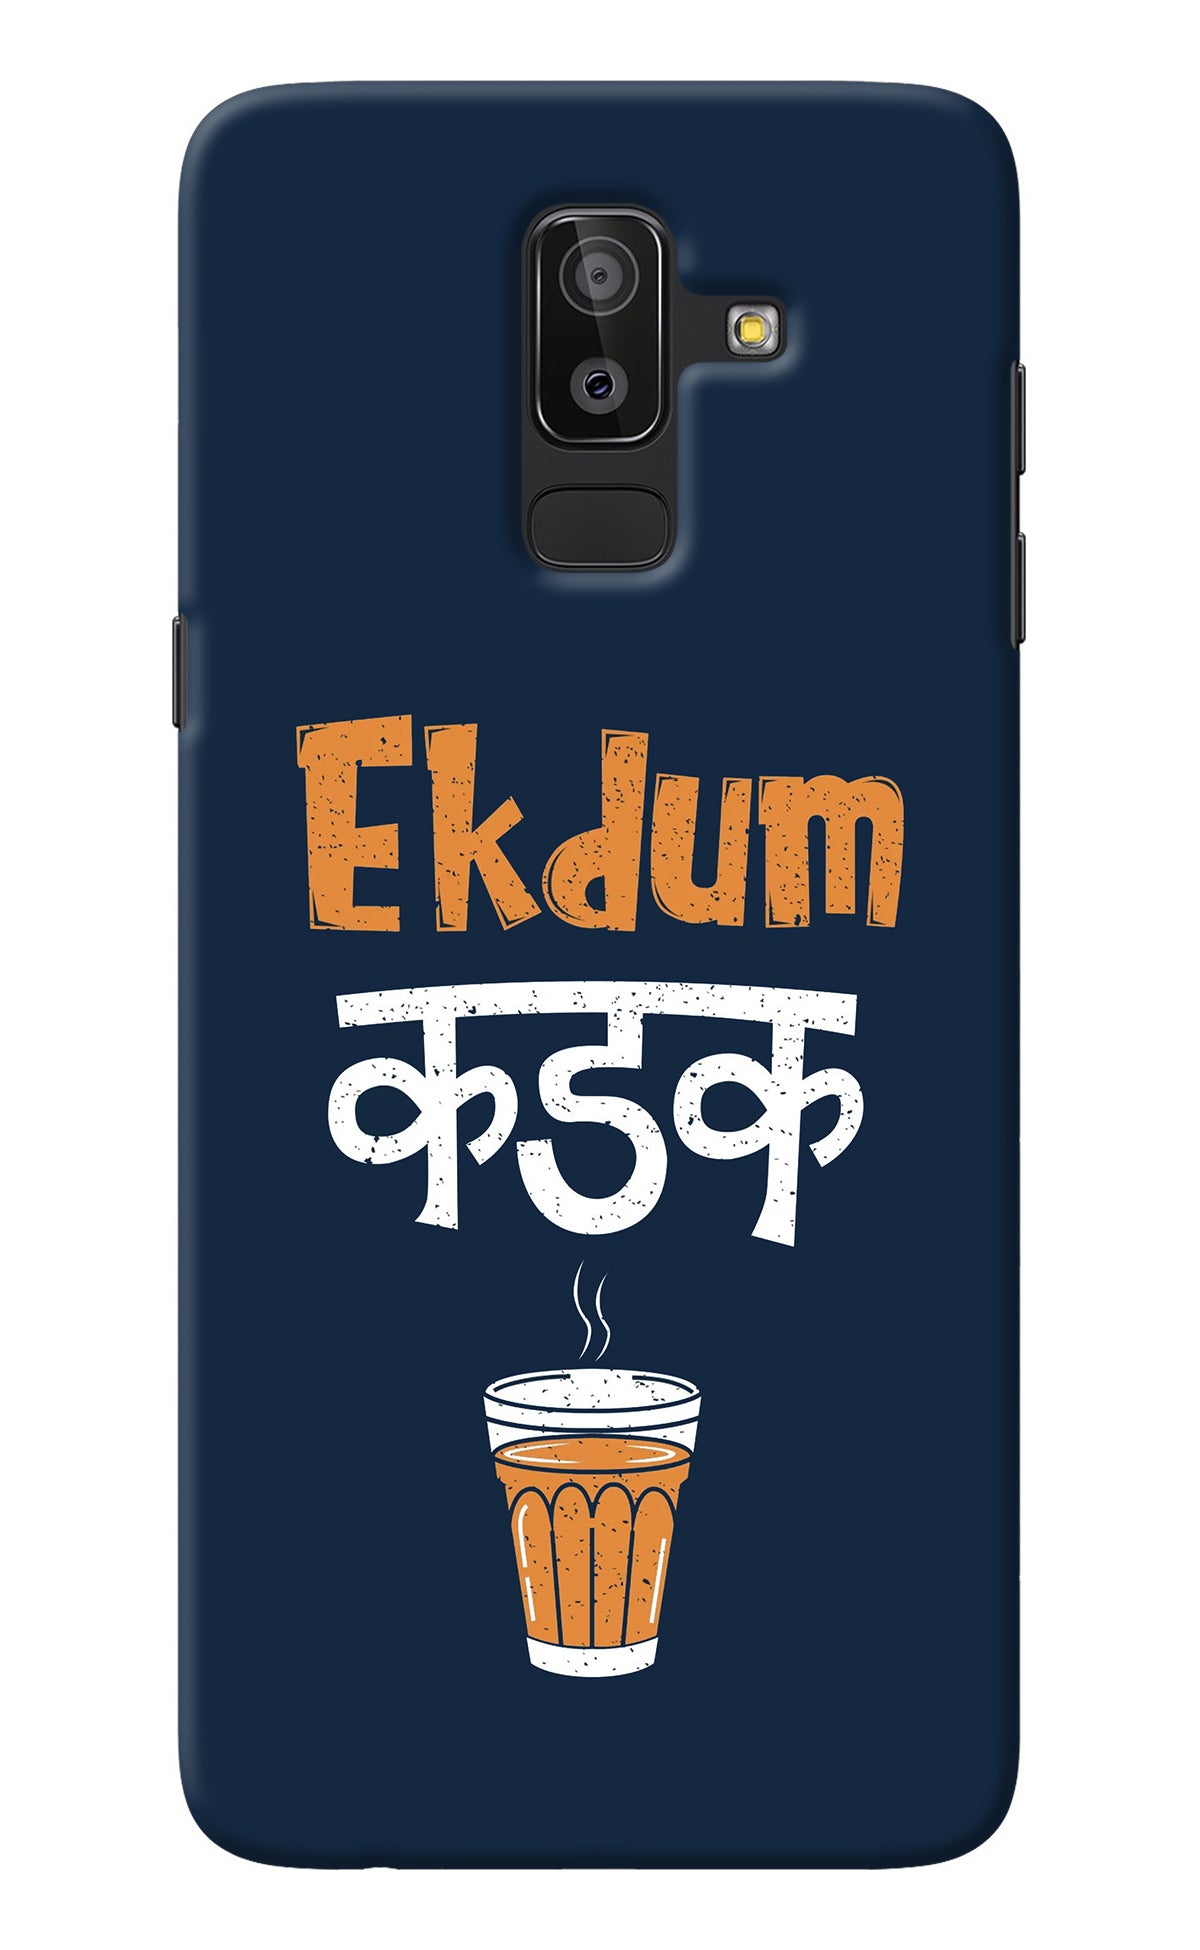 Ekdum Kadak Chai Samsung On8 2018 Back Cover